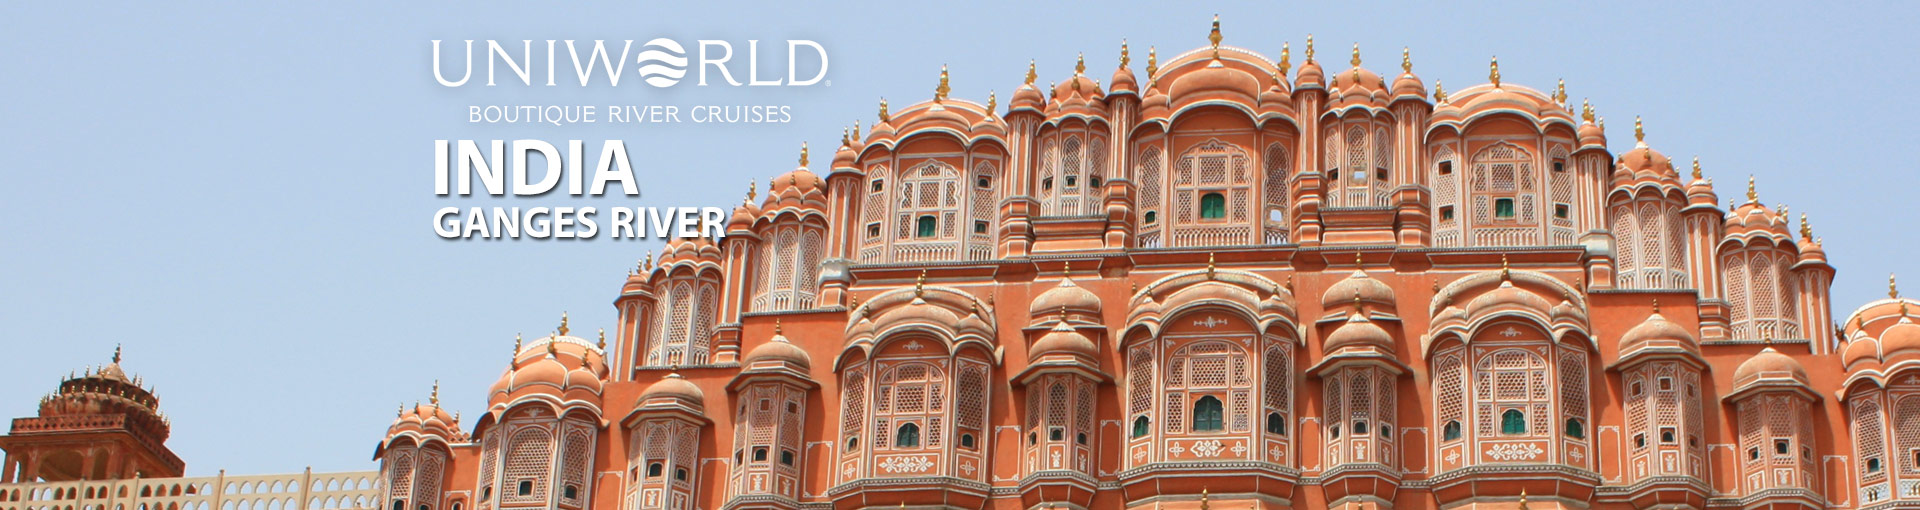 Uniworld River Cruises along India's Ganges River